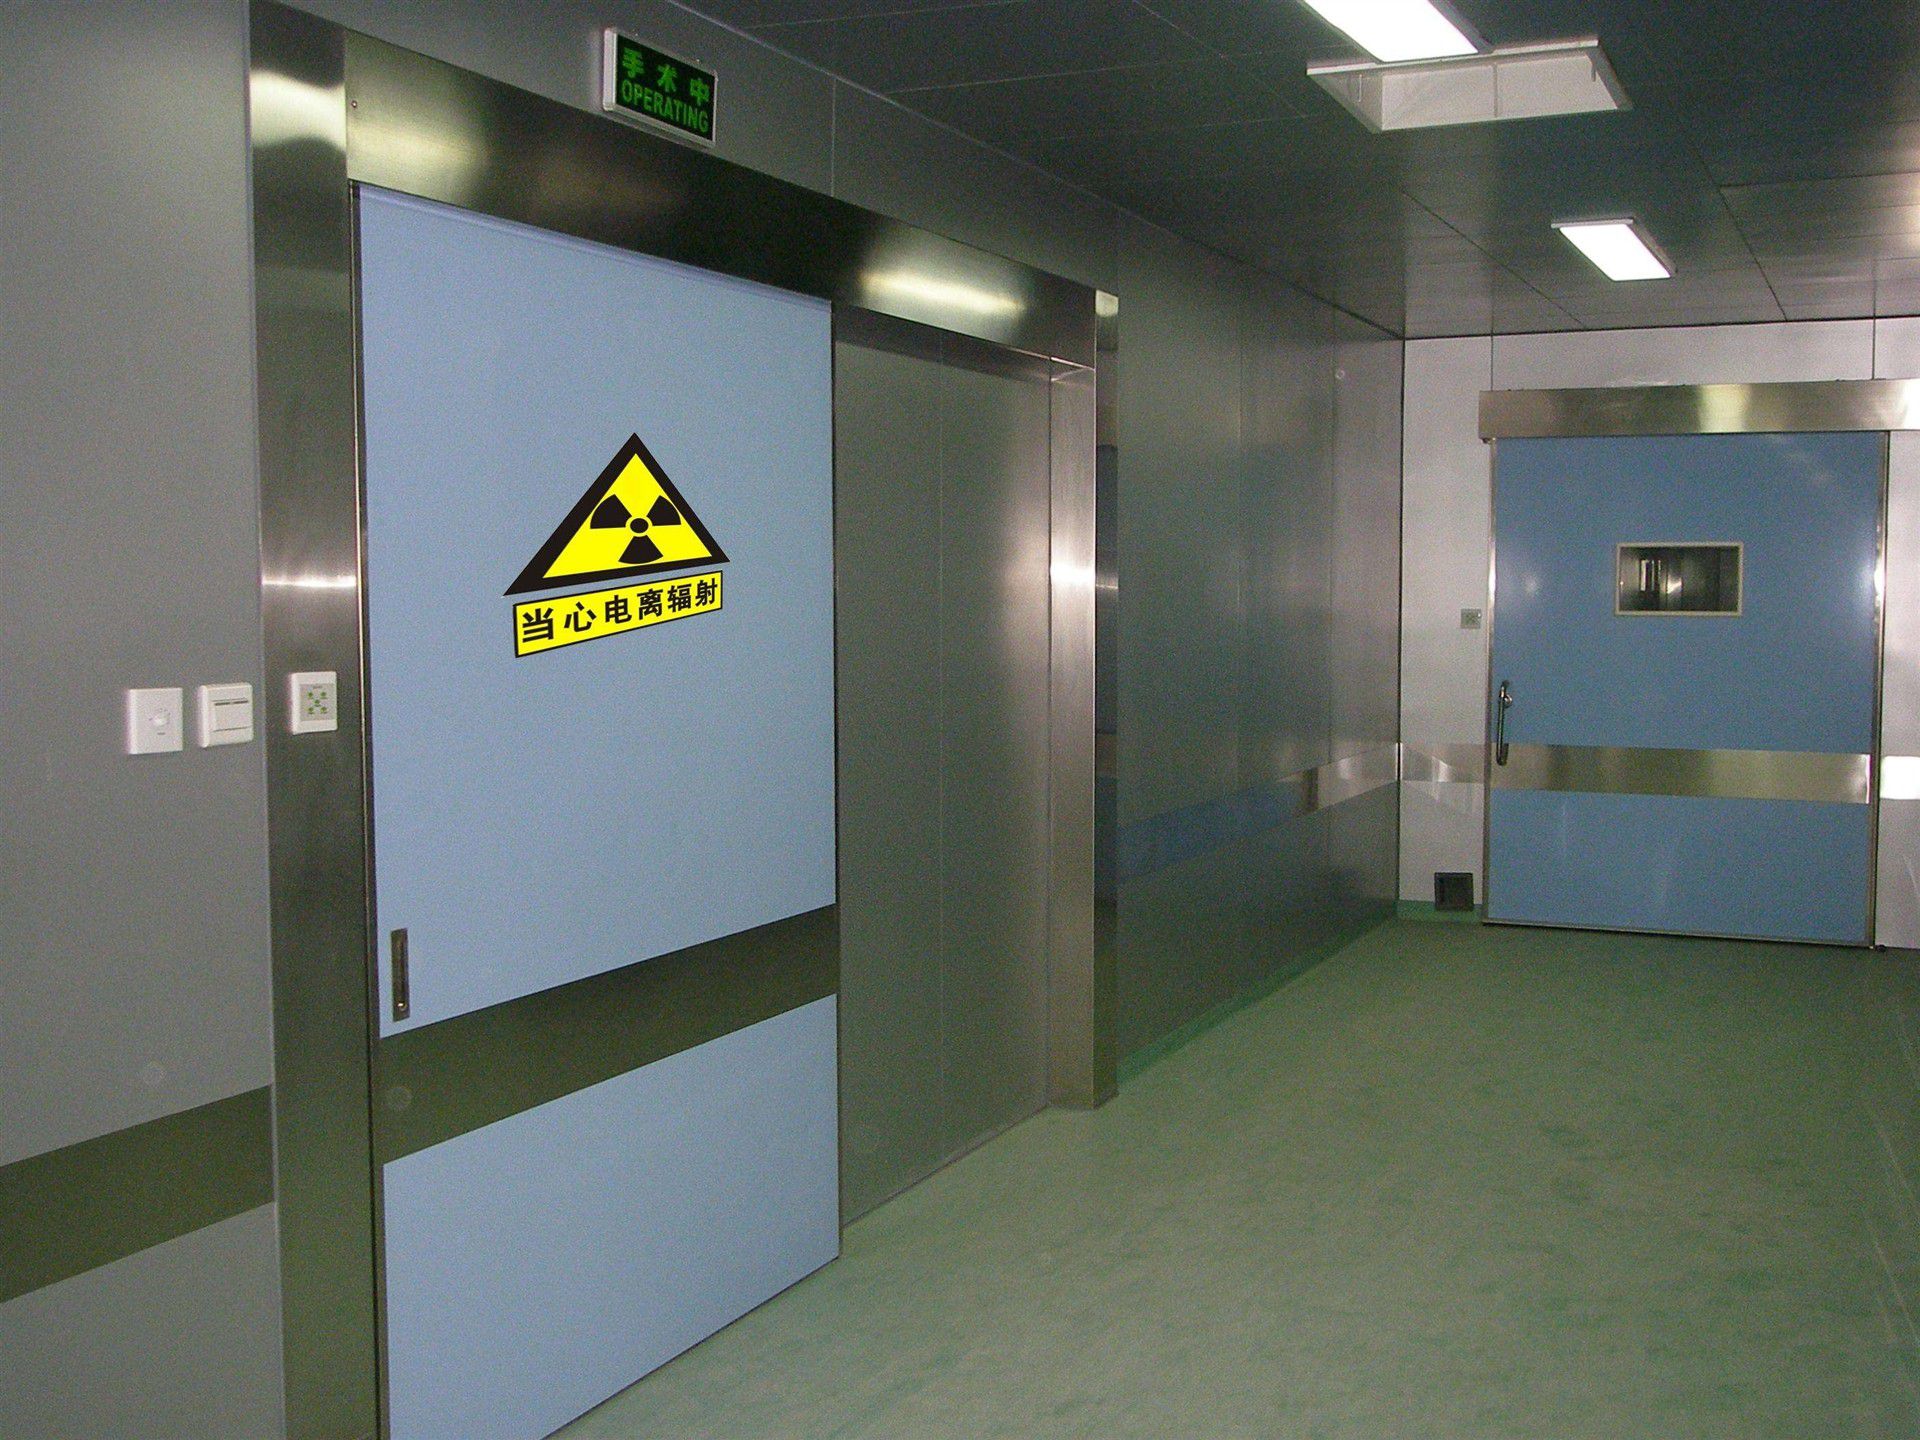 CT室铅门,铅箱,3mm铅板,CT室铅板,放射科铅板,铅板厂家-阜新CT室铅板公司